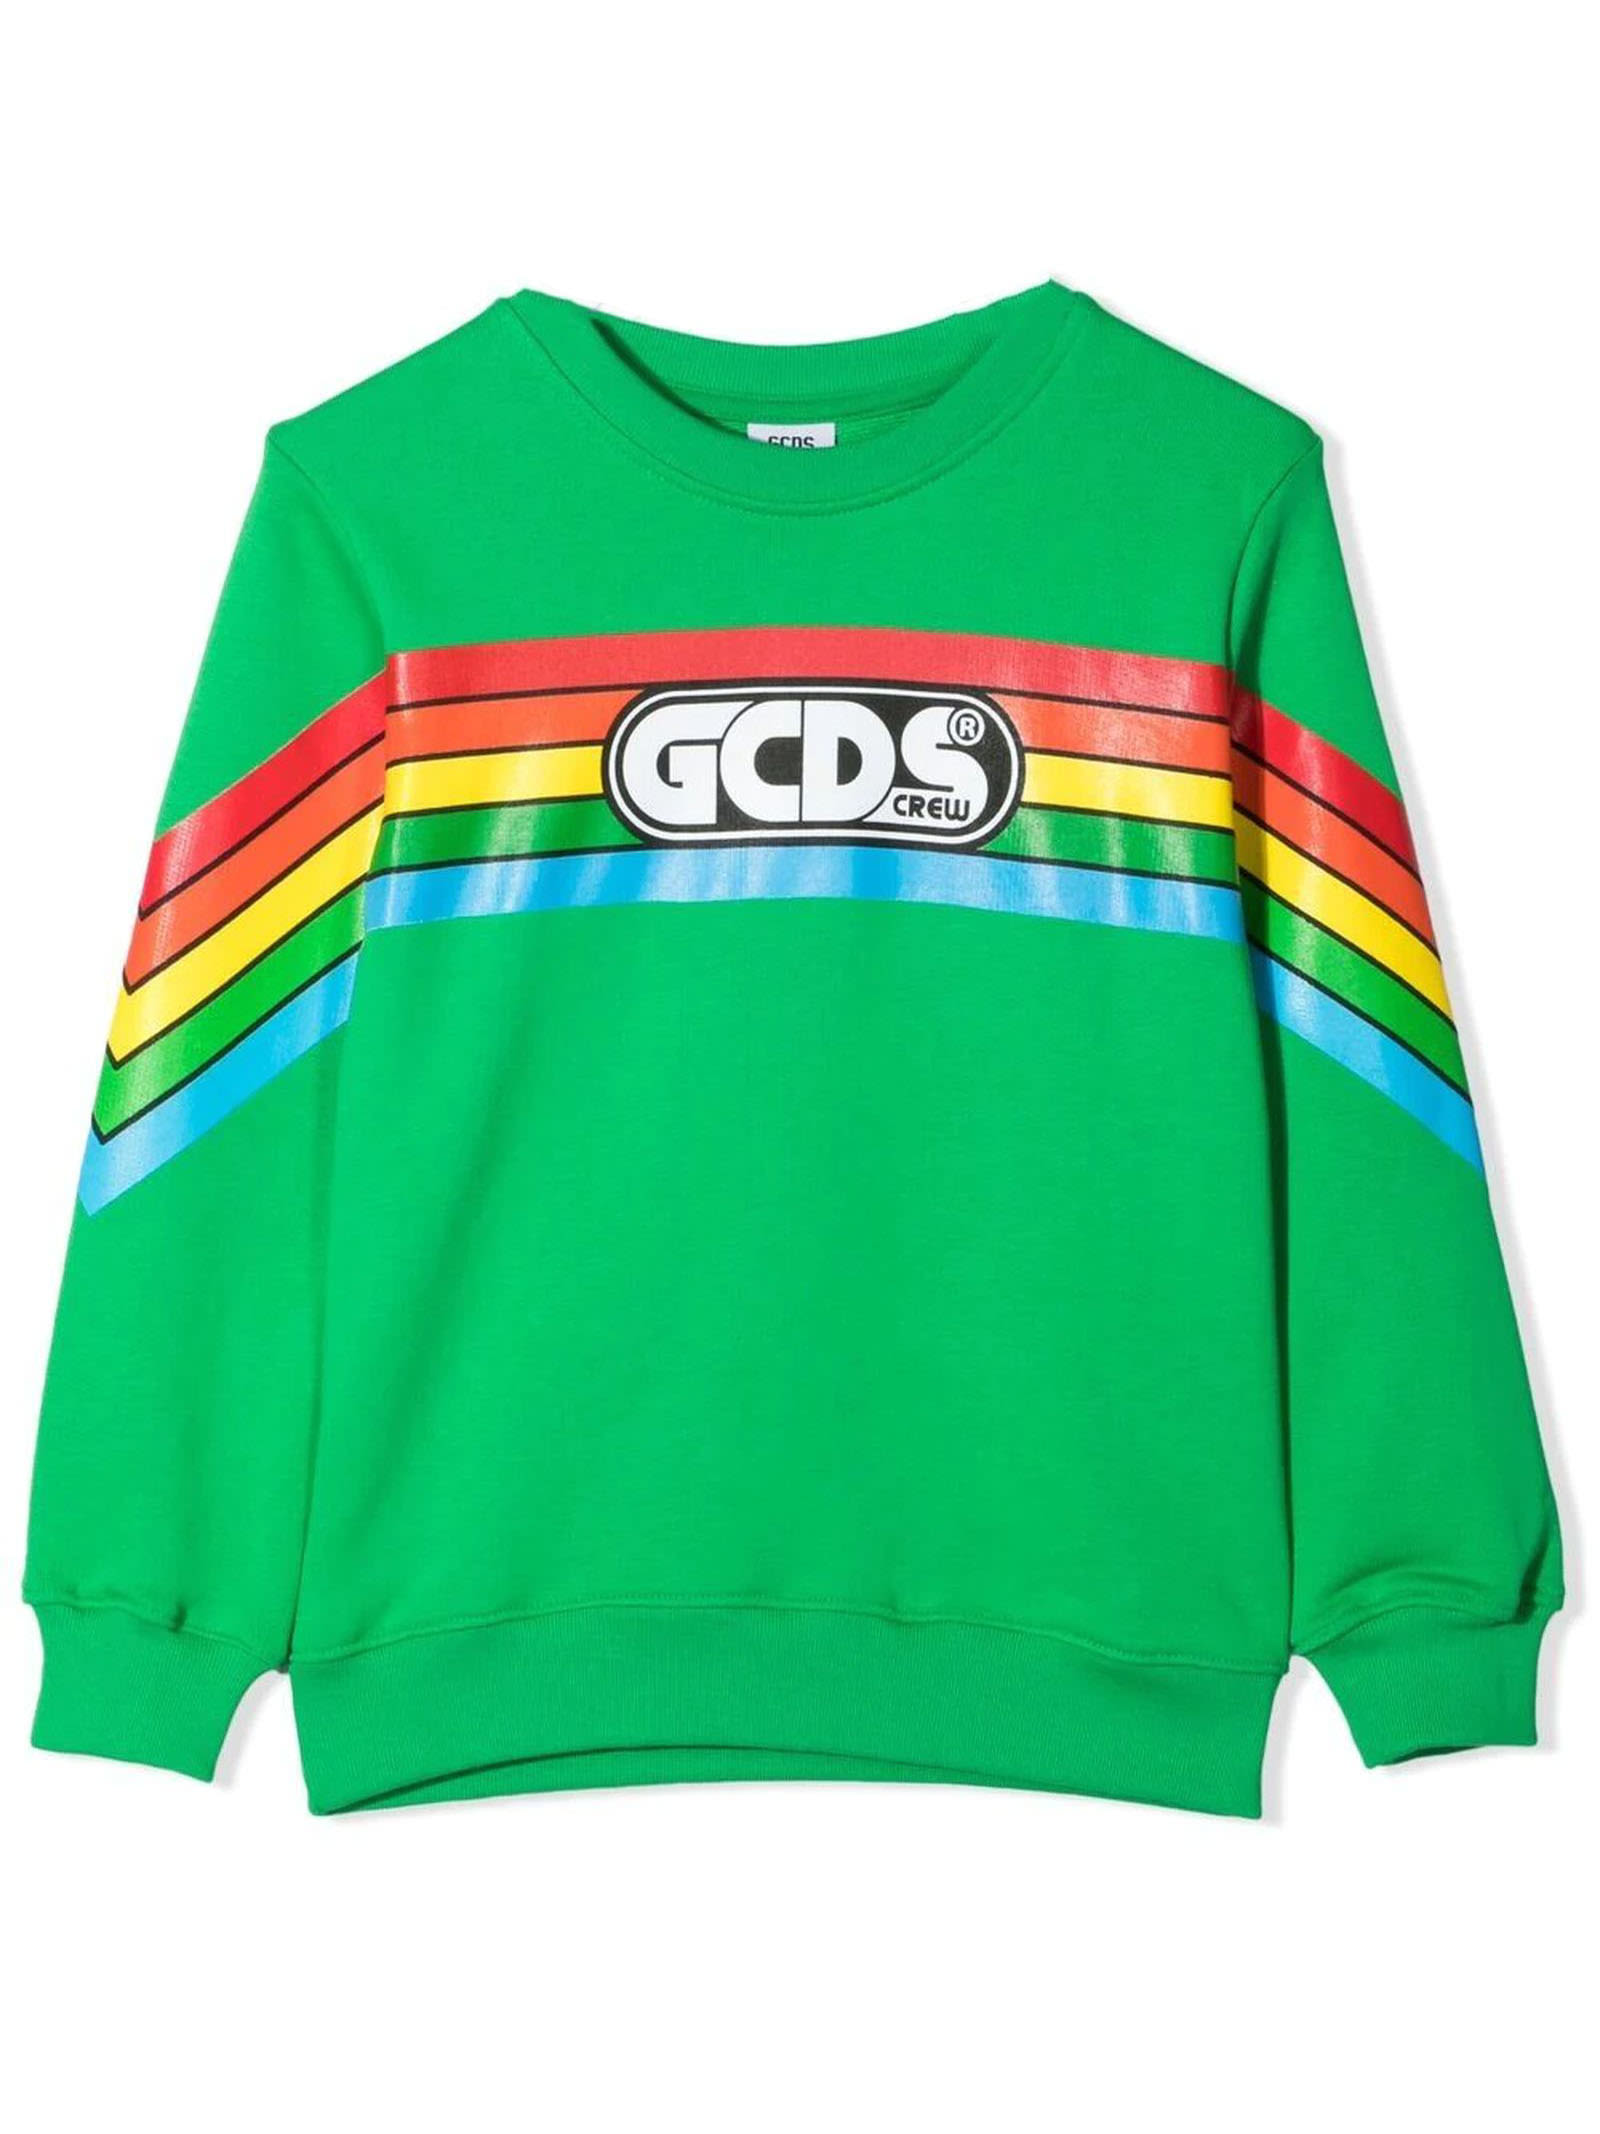 GCDS Green Cotton Sweatshirt